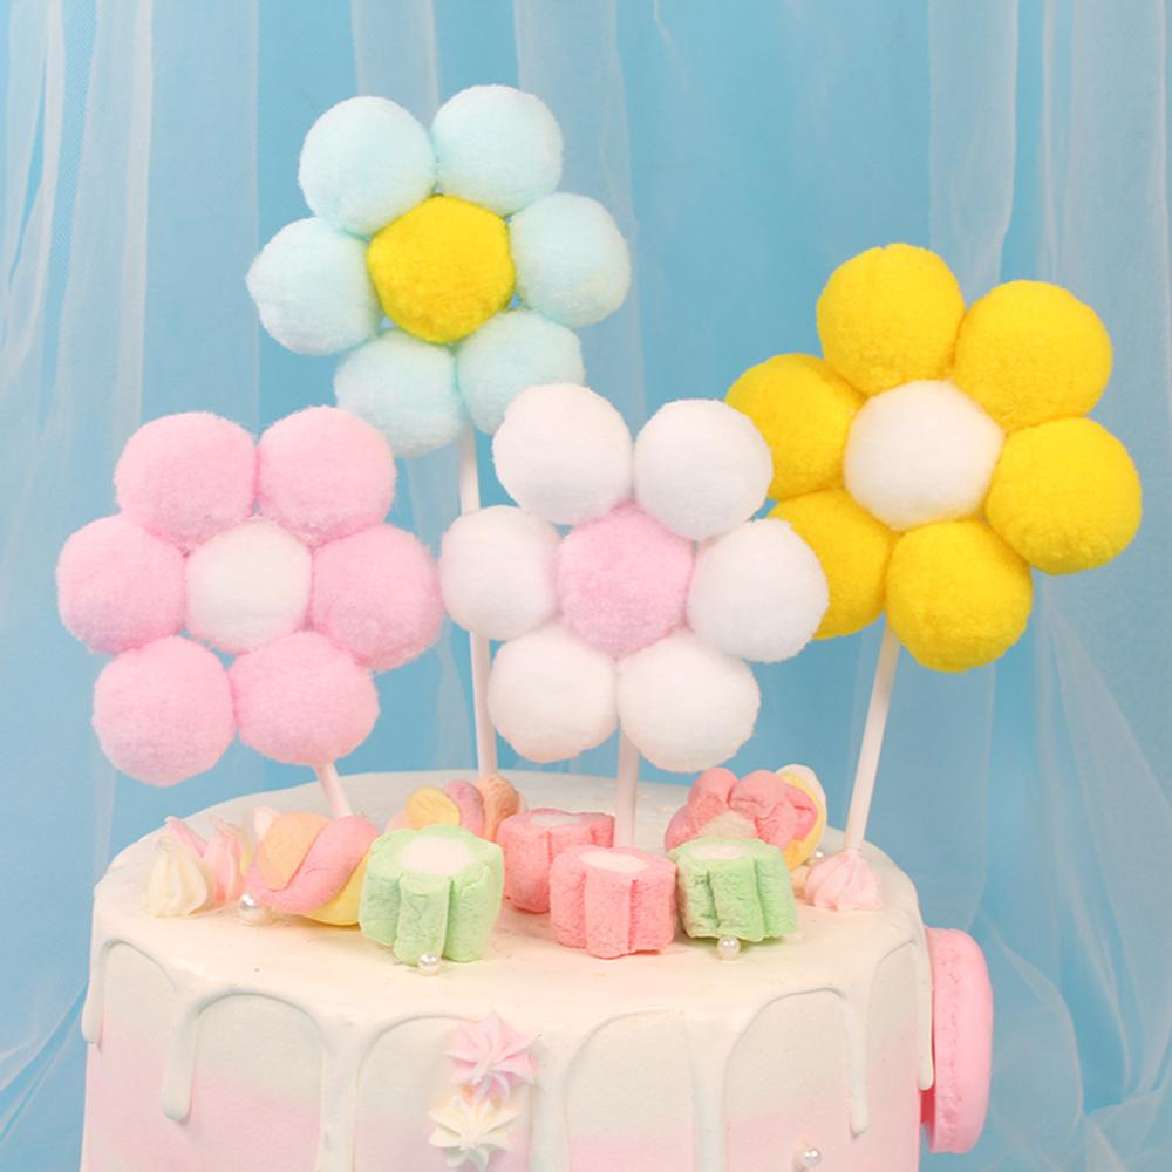 Cake Topper, Cake Decorations - Cotton Fluffy Daisy - White